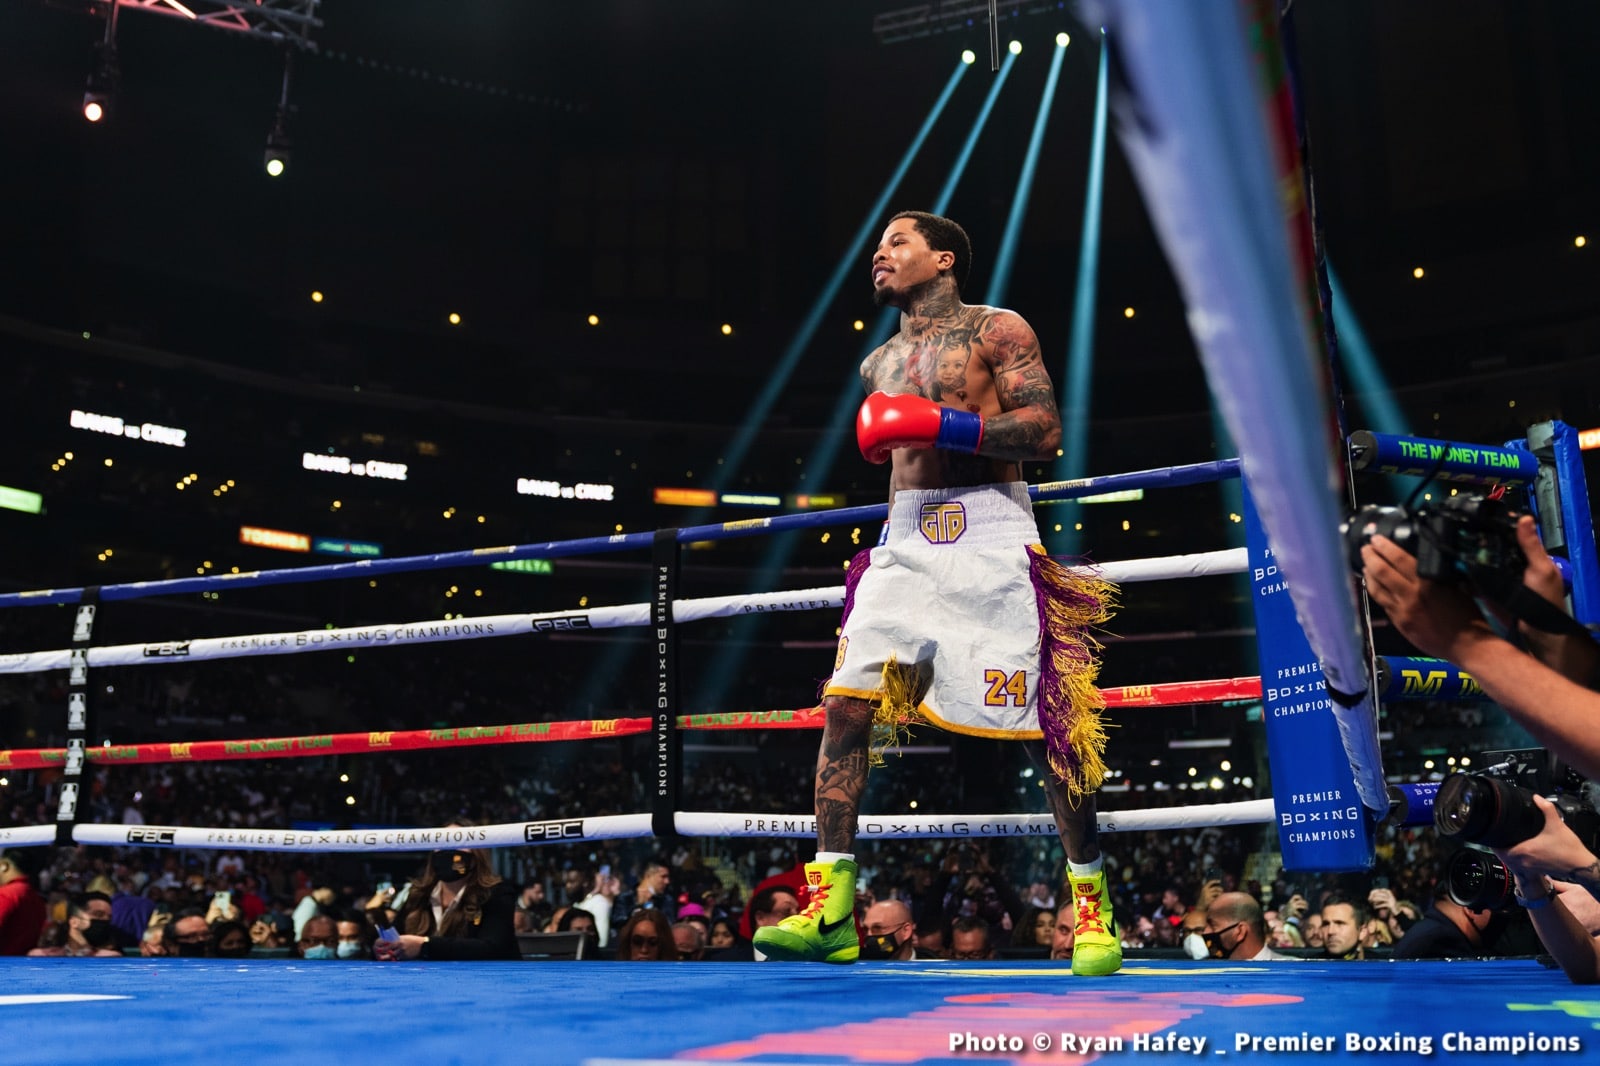 Andre Ward boxing image / photo